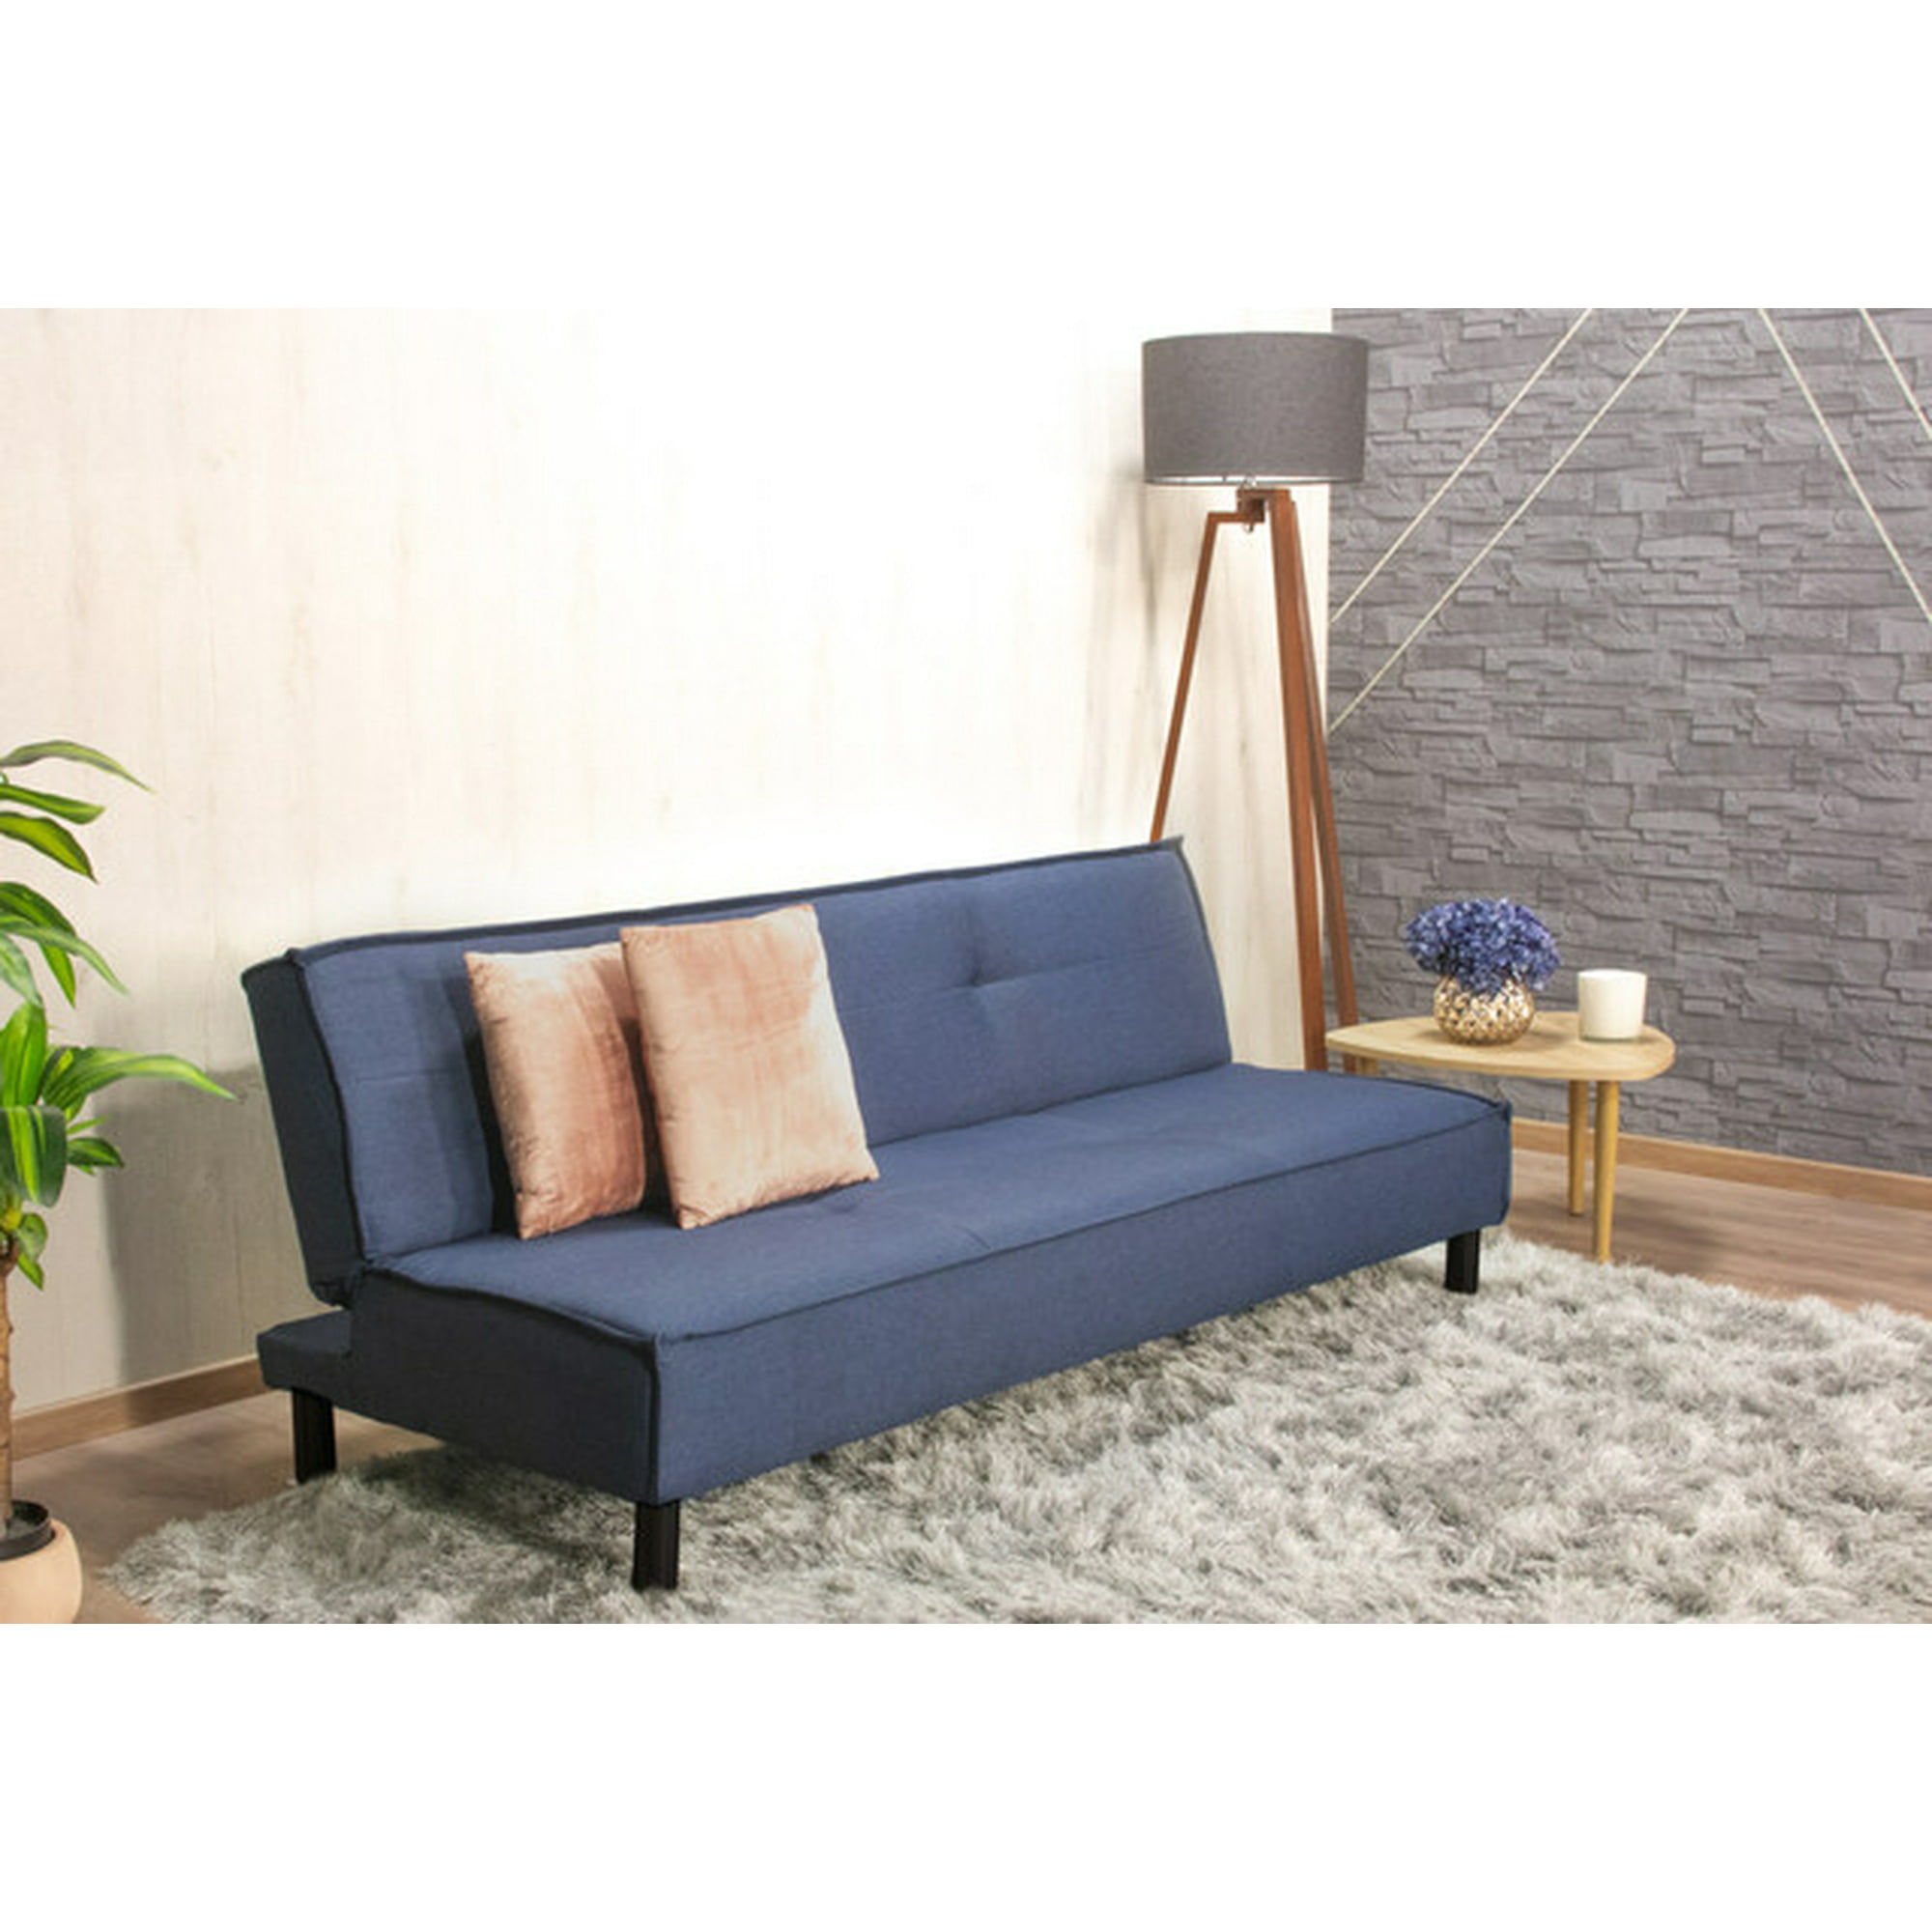 Sofa Cama TOMM 3 posiciones individual azul denim M & E MUEBLES